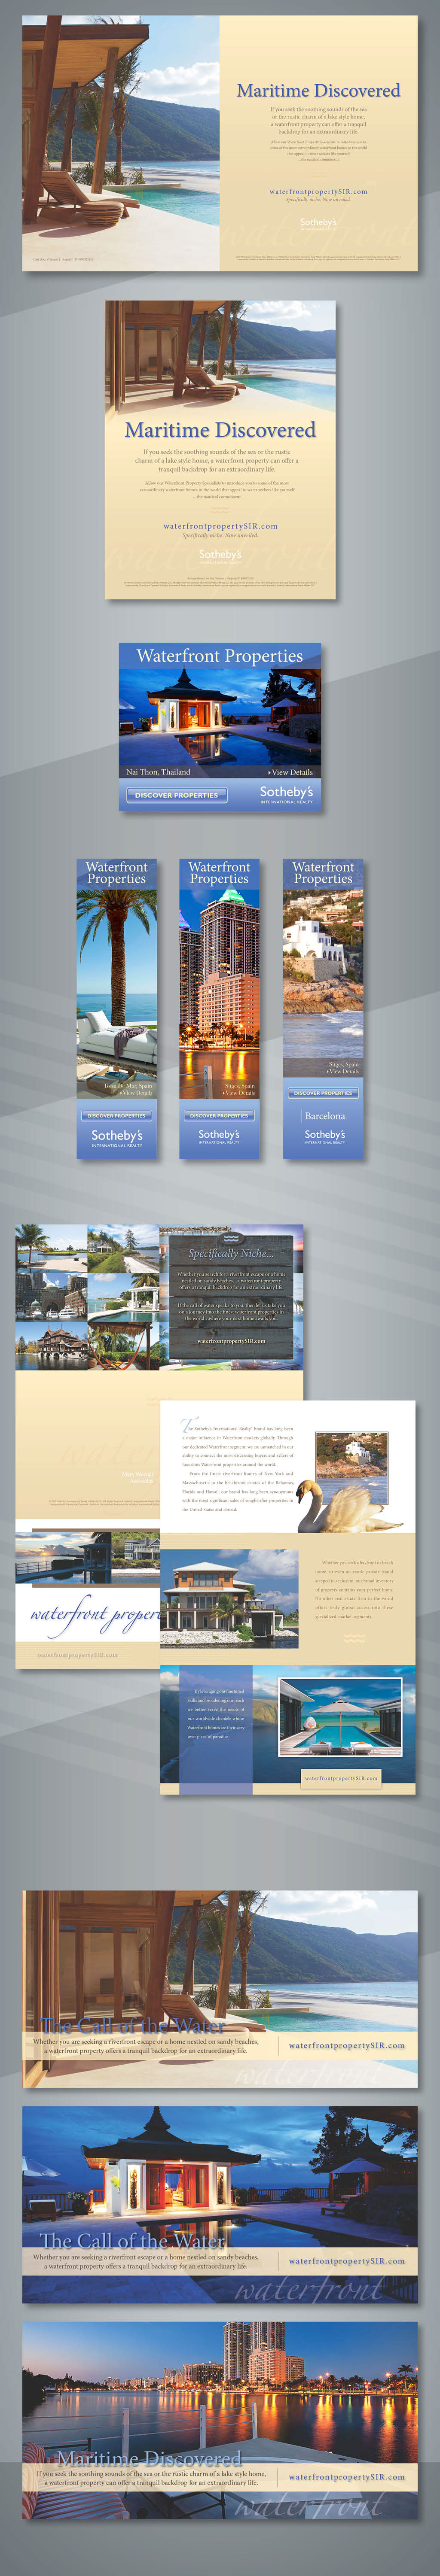 Real estate lifestyle marketing graphic design